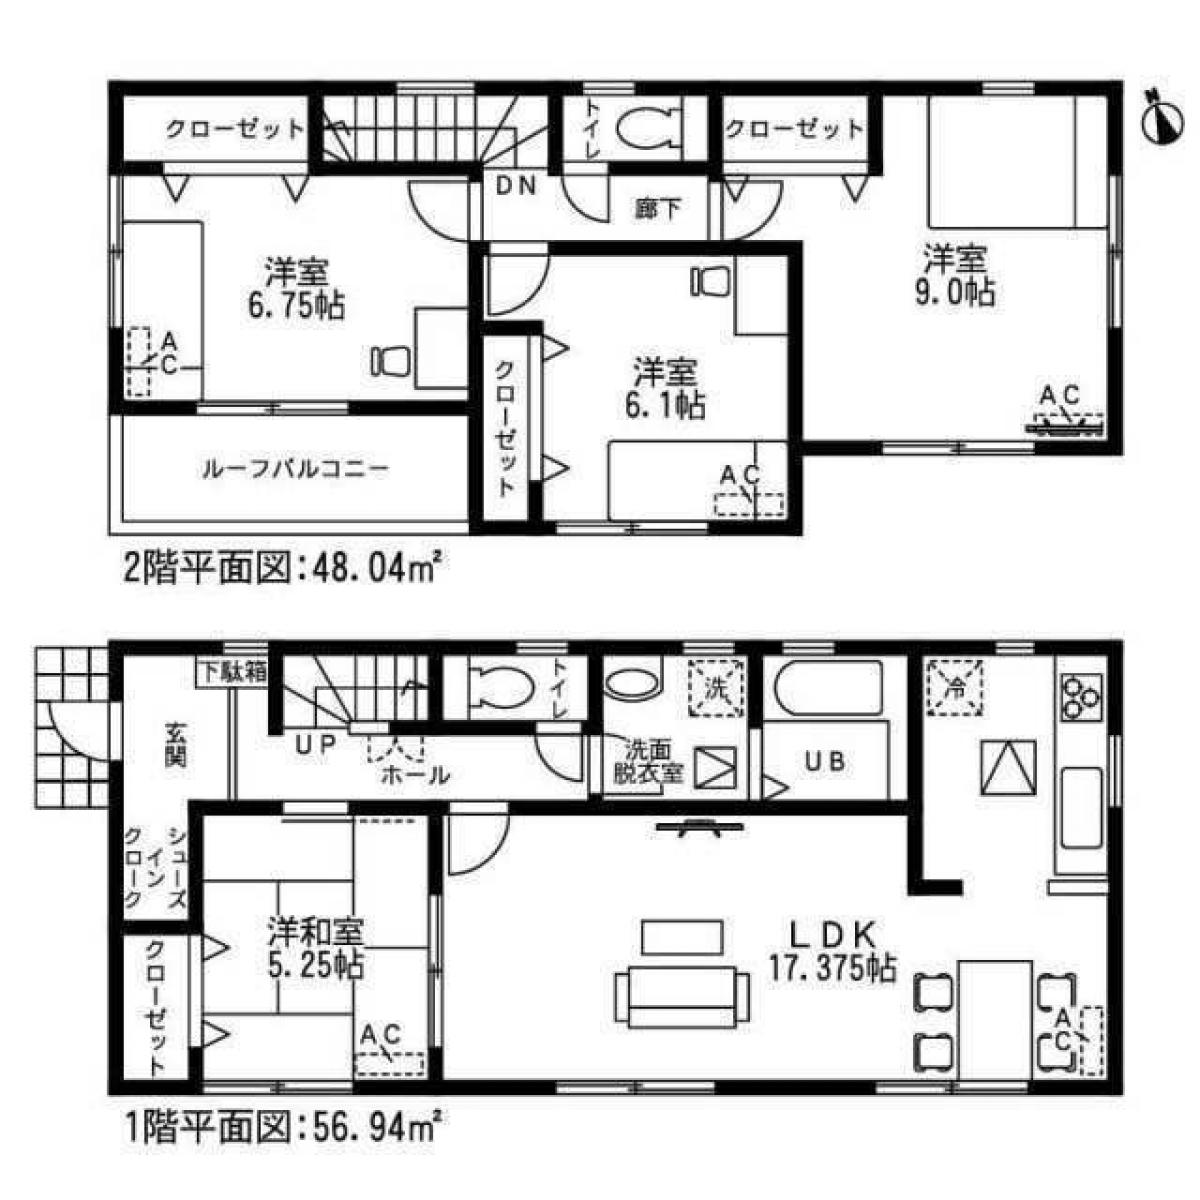 Picture of Home For Sale in Kakamigahara Shi, Gifu, Japan